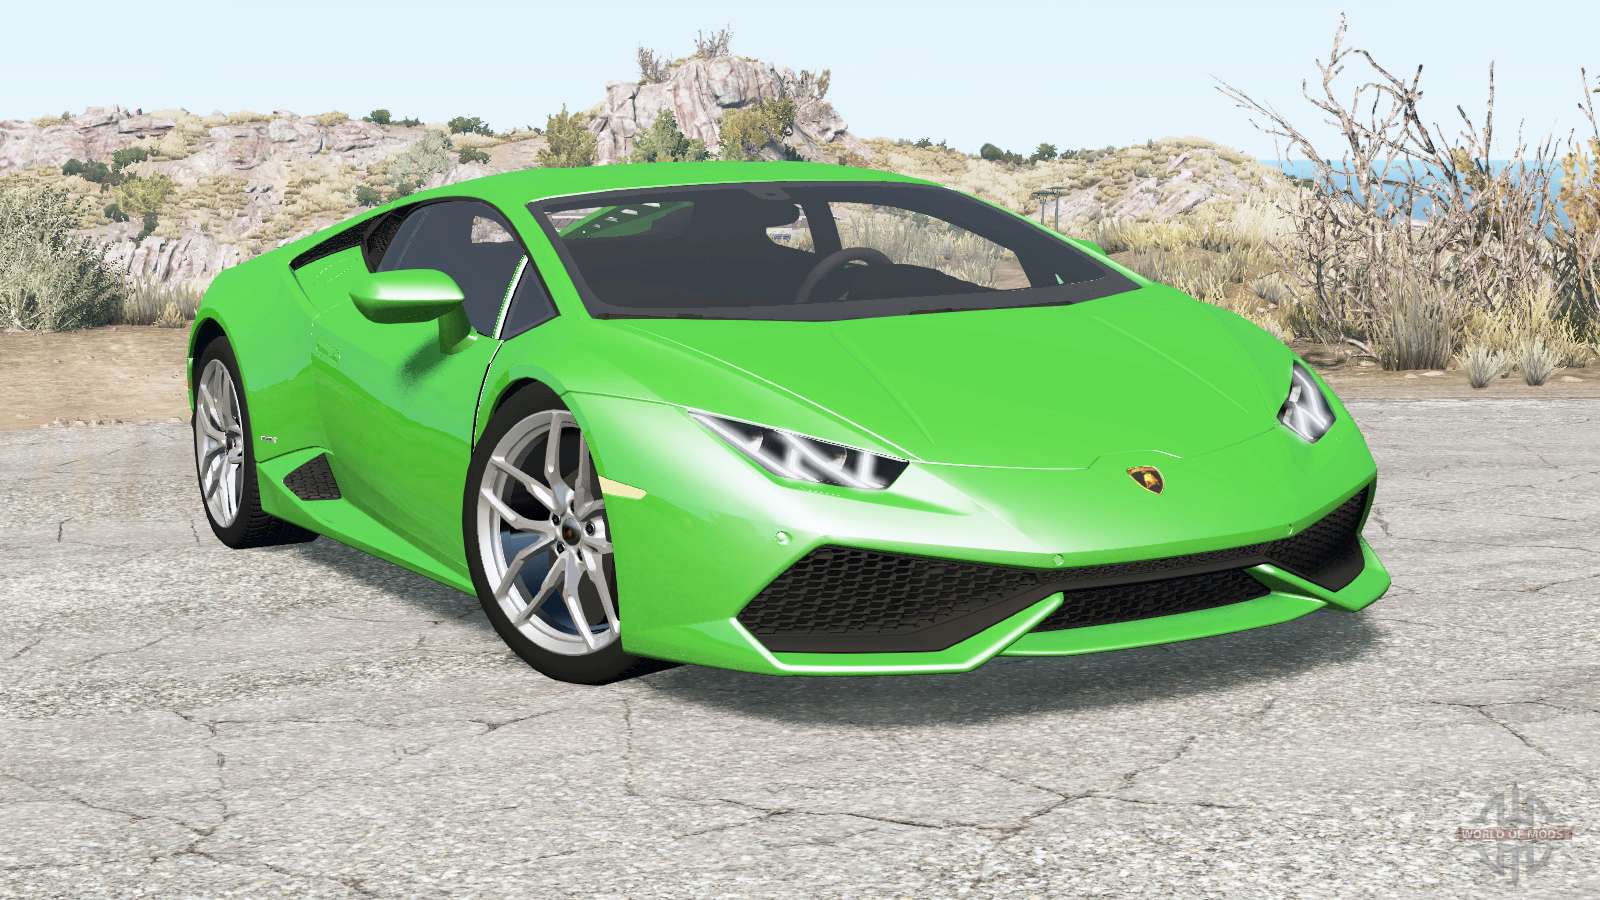 Lamborghini Huracan LP610-4 Online Driving Simulator Launched - DriveSpark  News